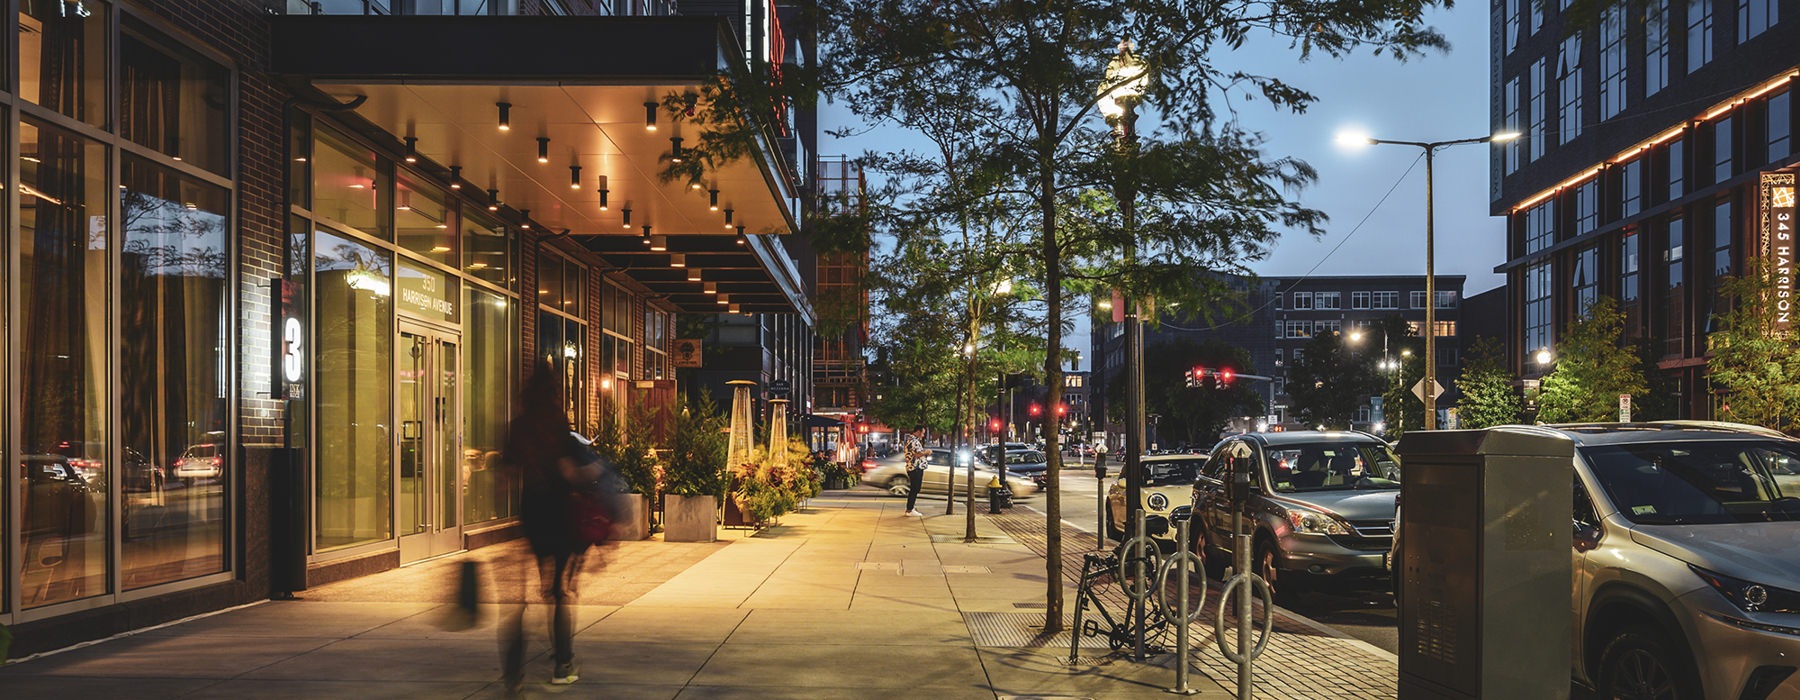 Image of downtown Boston sidewalk.